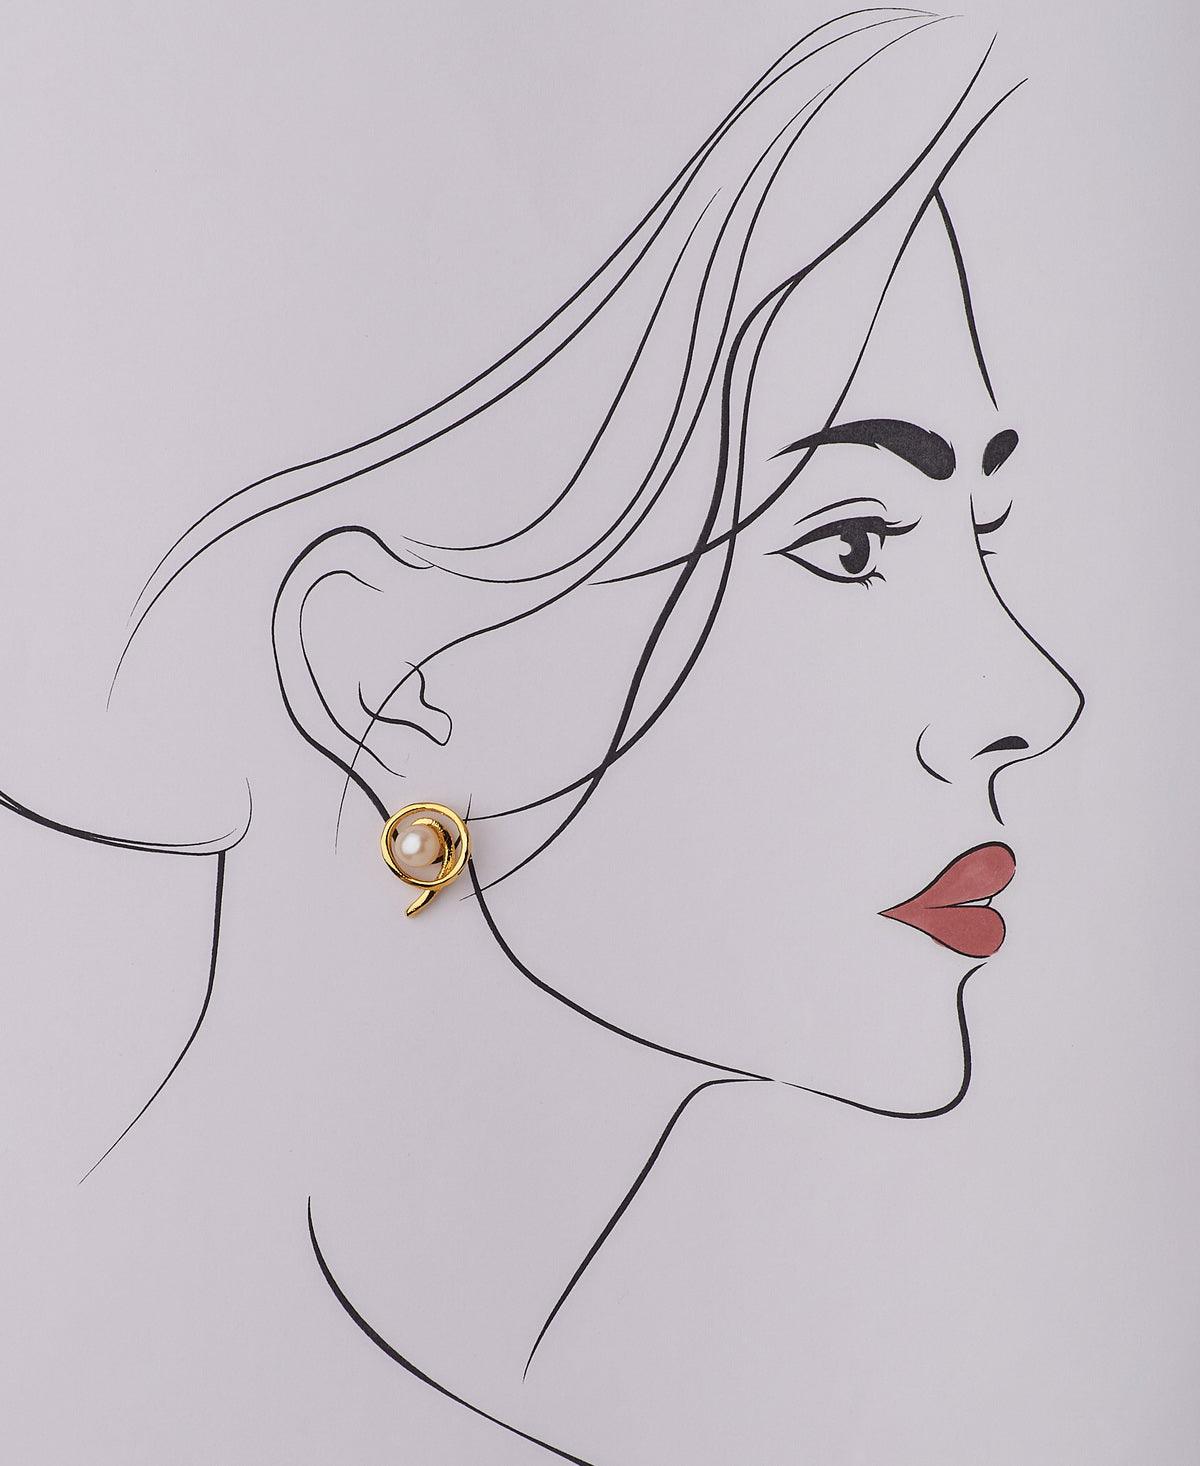 Fashionable Pearl Stud Earring - Chandrani Pearls